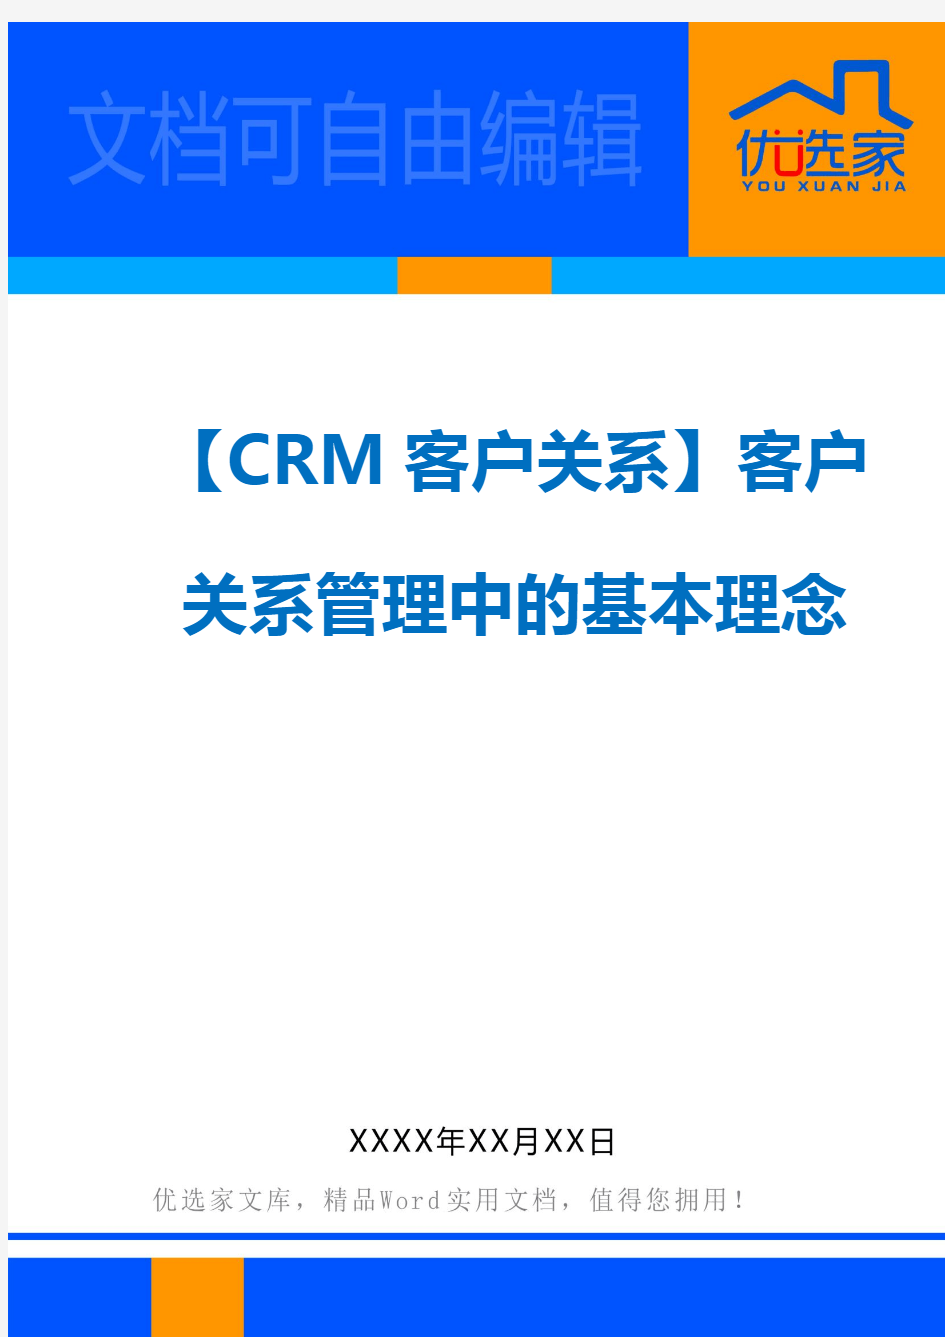 【CRM客户关系】客户关系管理中的基本理念